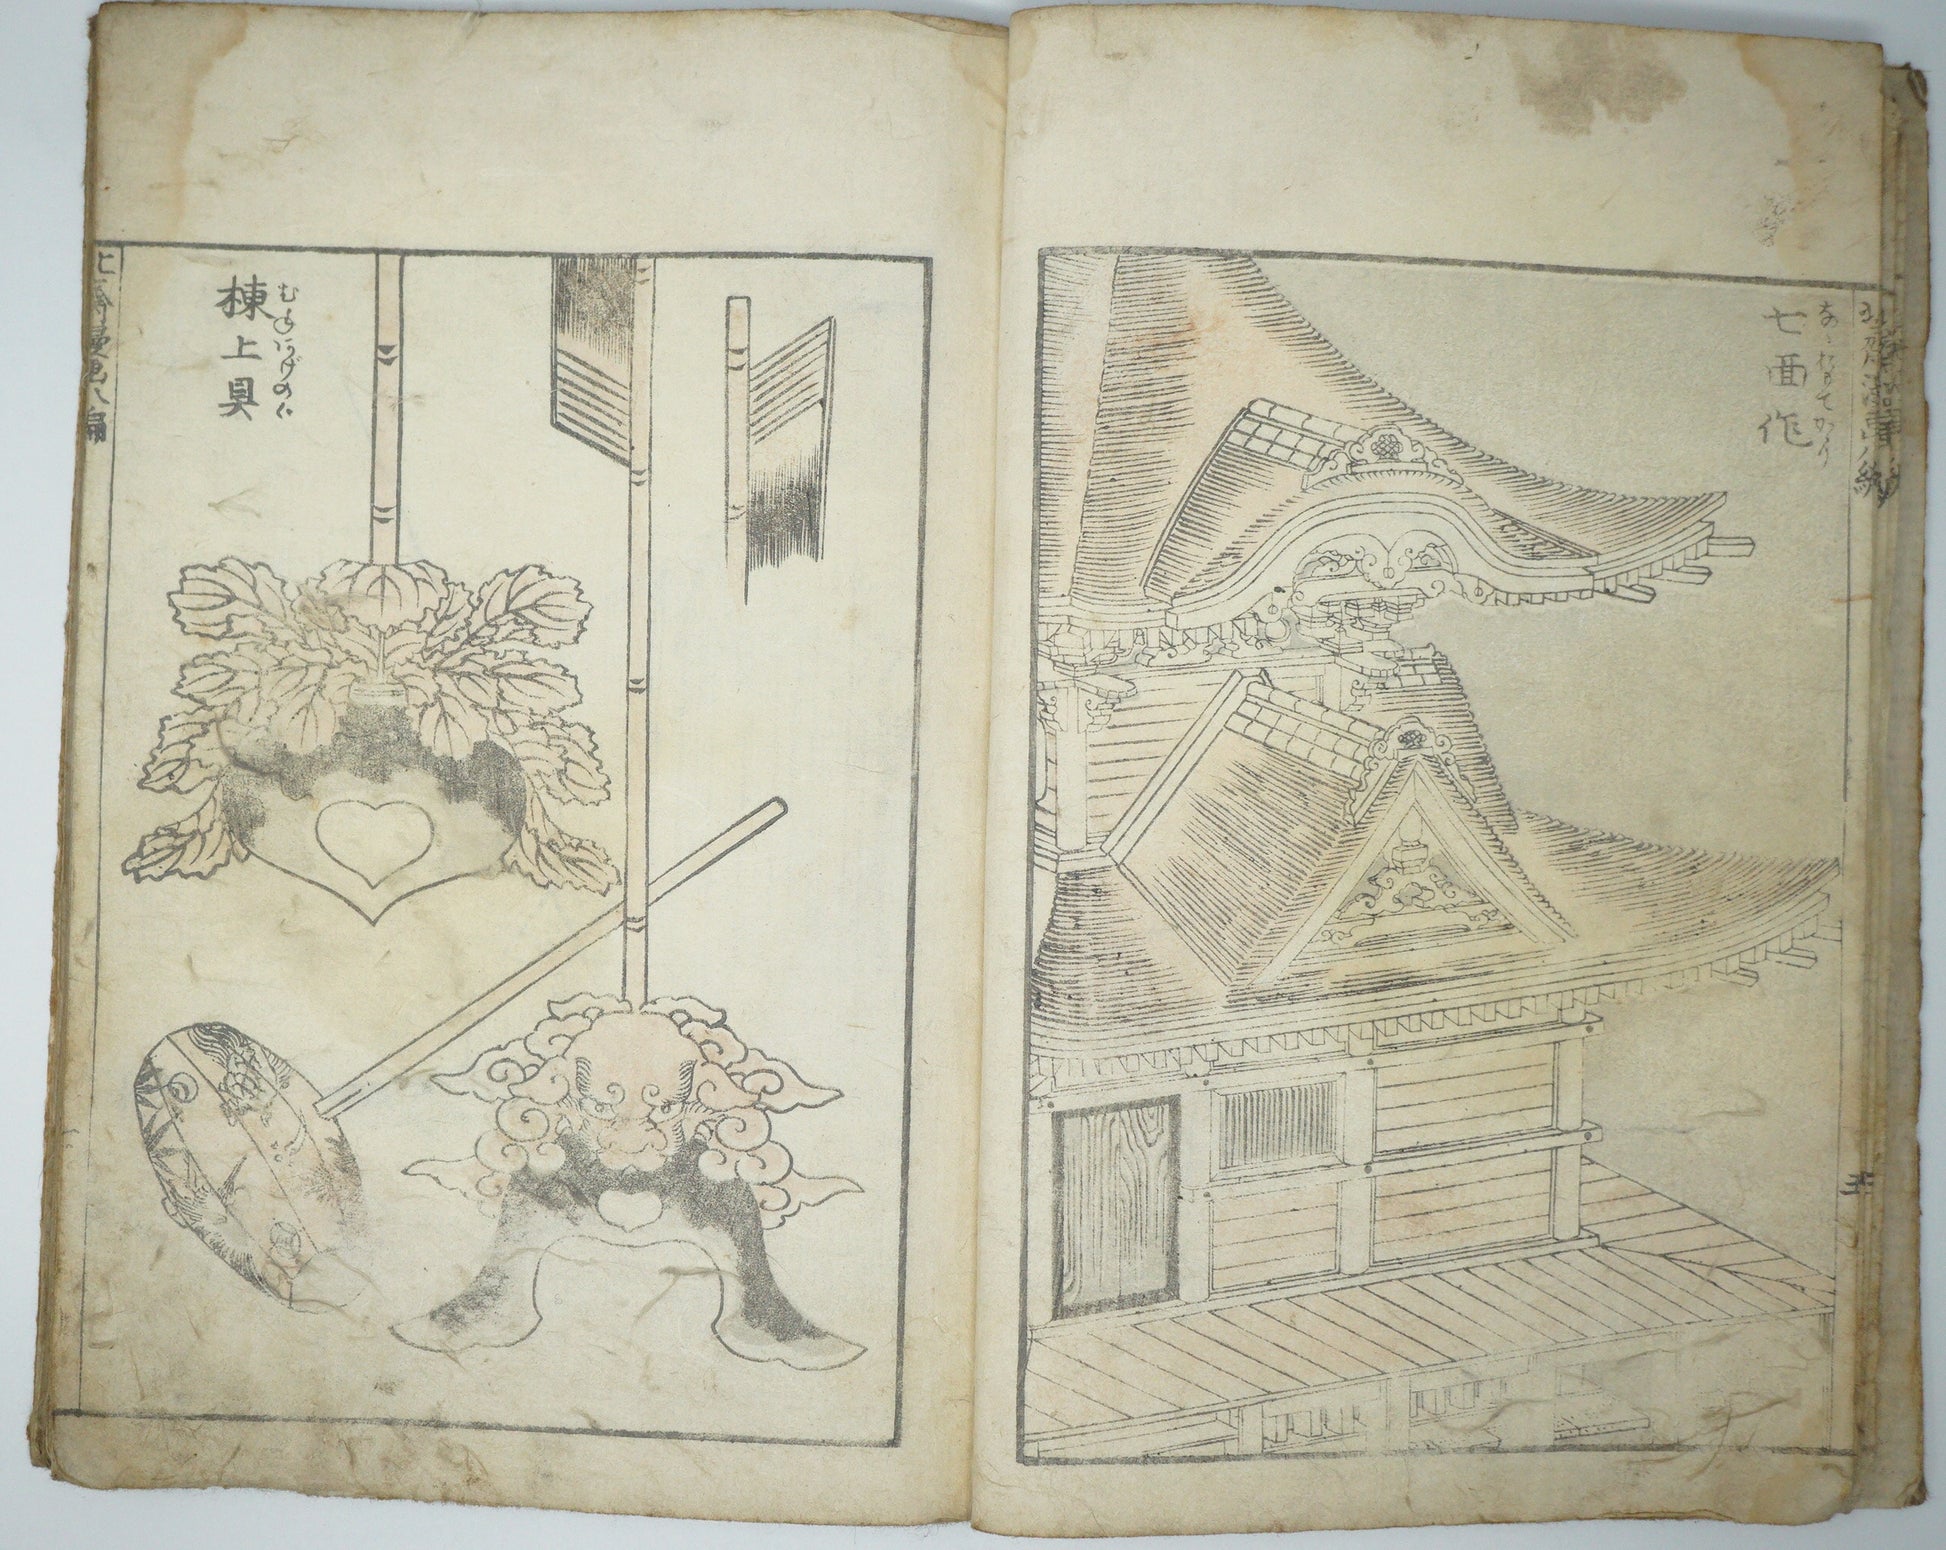 Hokusai Manga (Japanese and Japanese Edition)